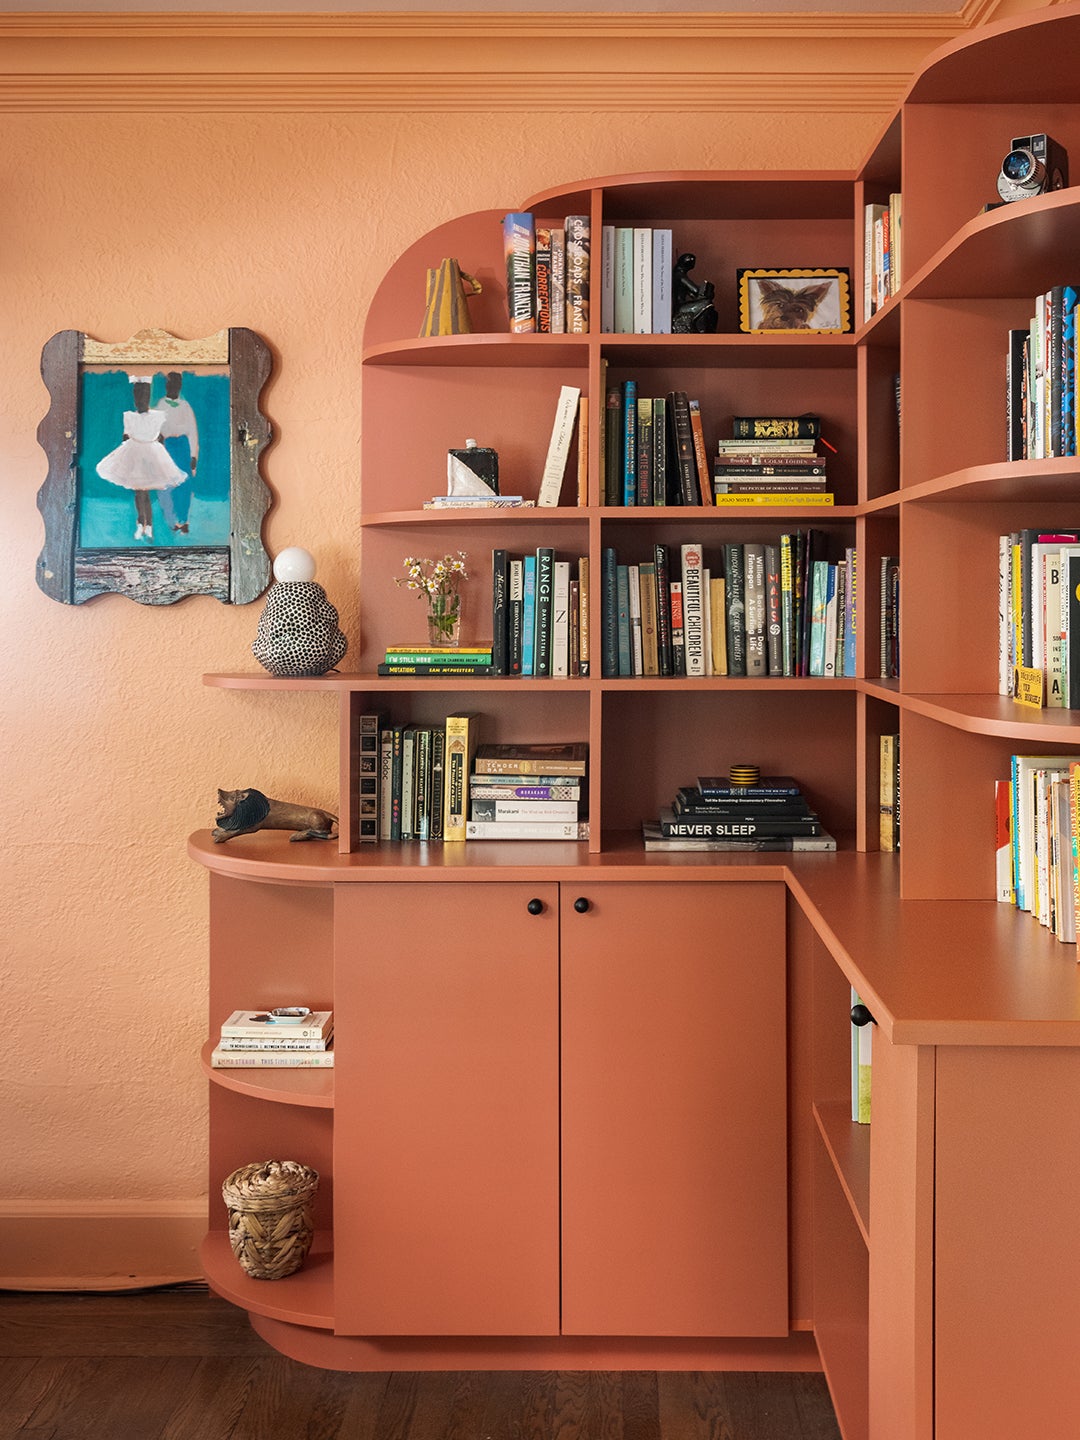 curved peach built-in bookcase against peach walls